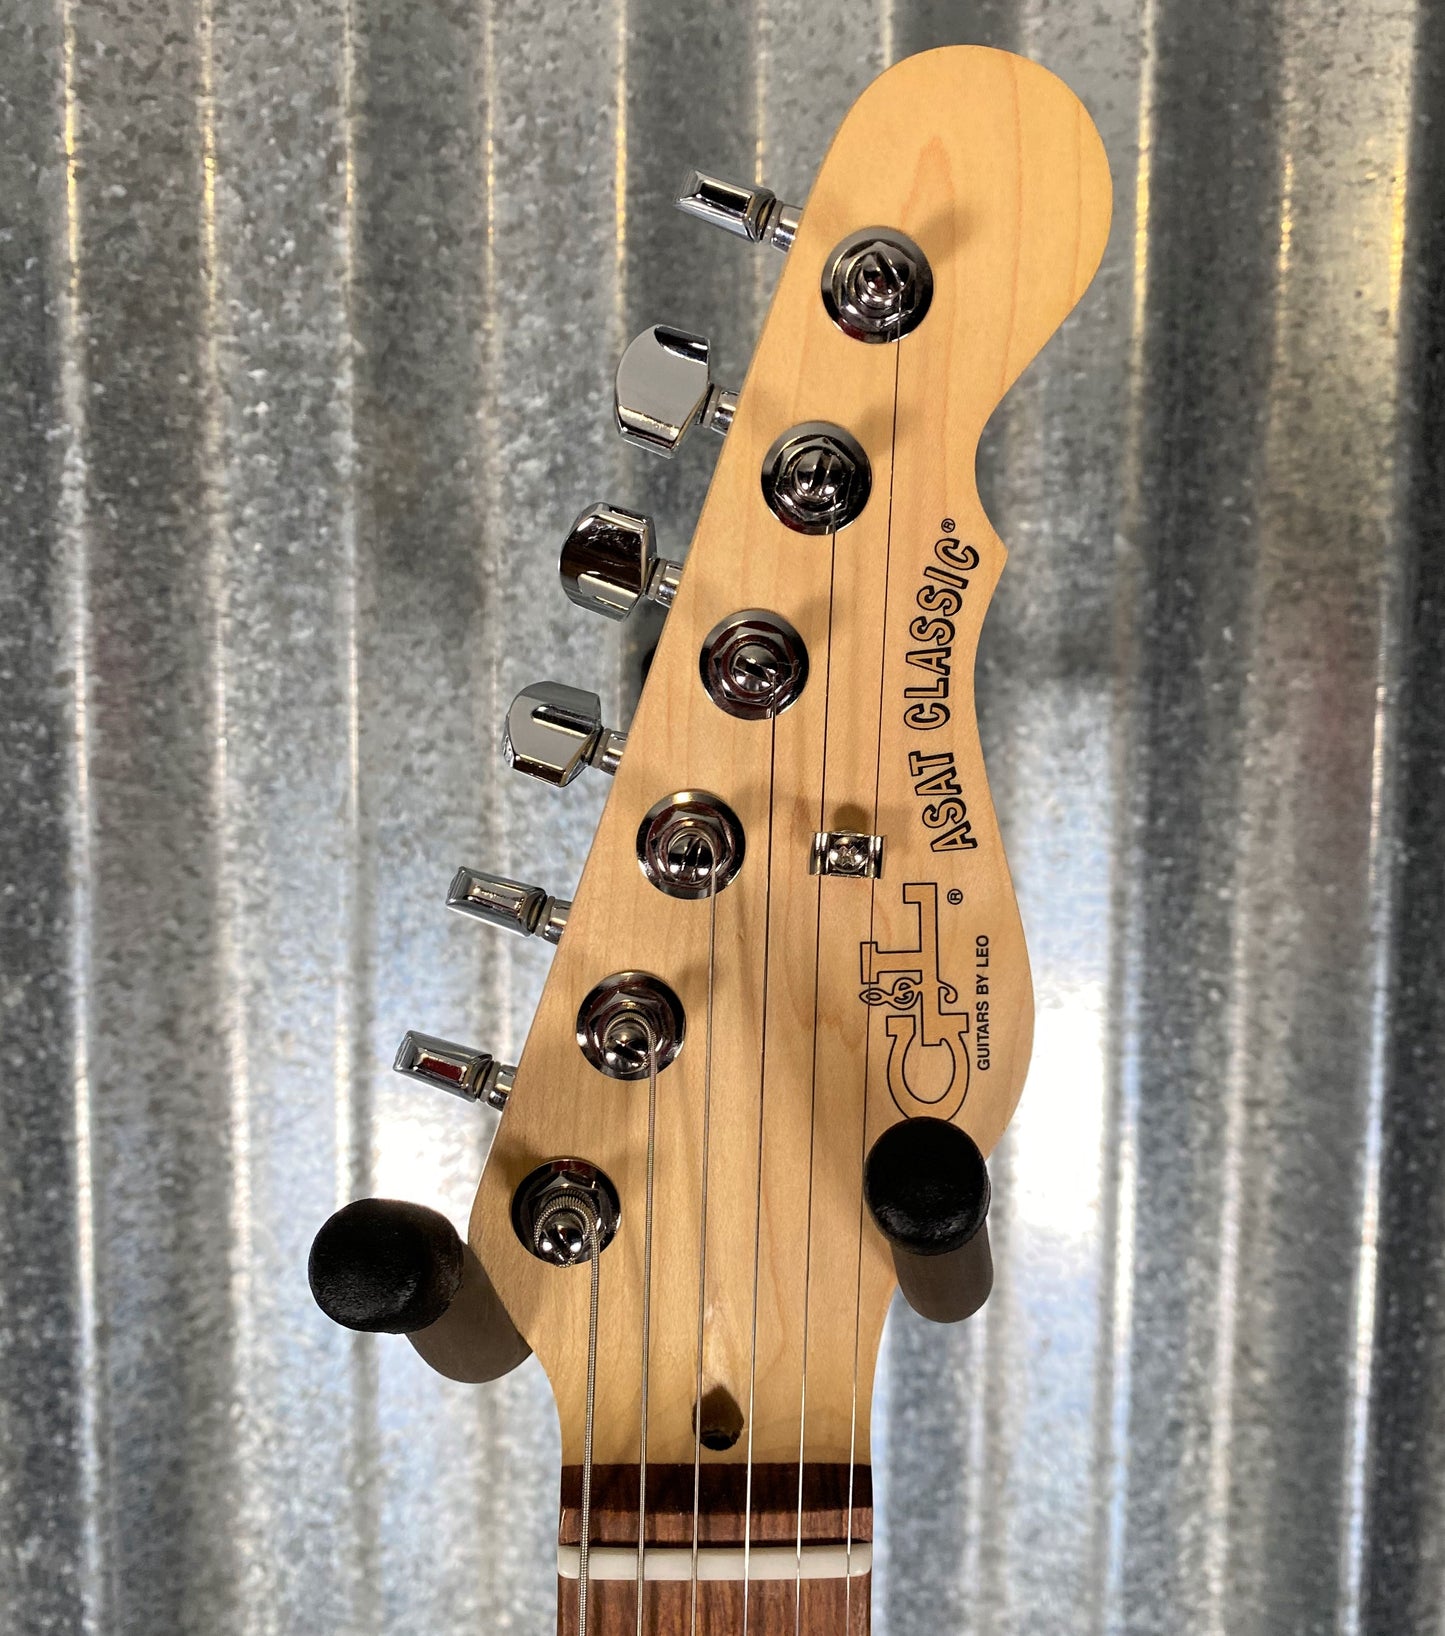 G&L USA 2023 Custom ASAT Classic Turquoise Guitar & Bag #1127 Used